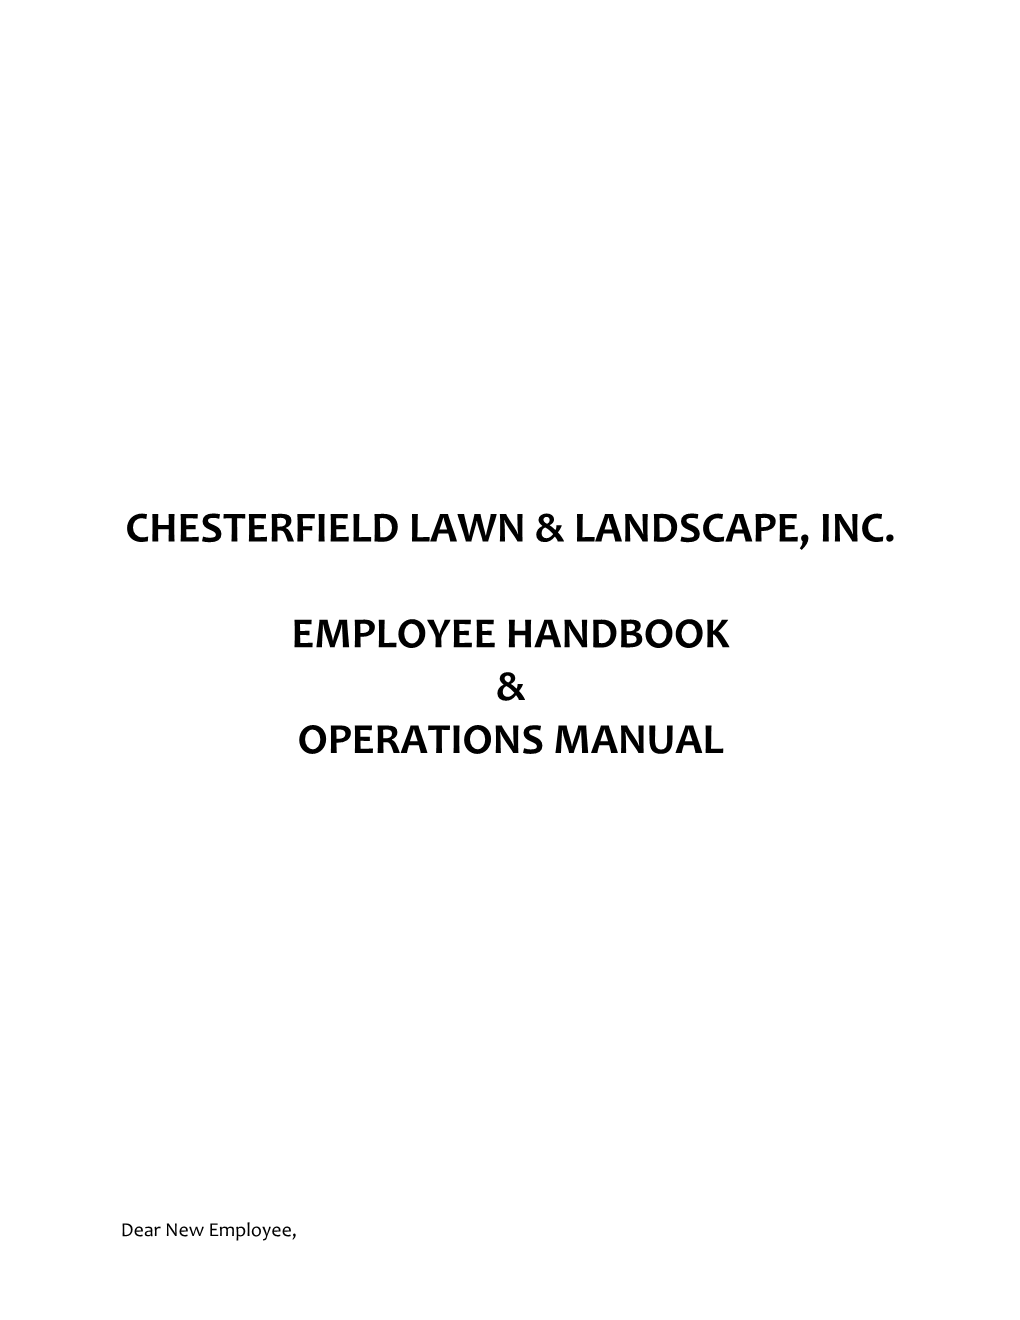 Chesterfield Lawn & Landscape, Inc